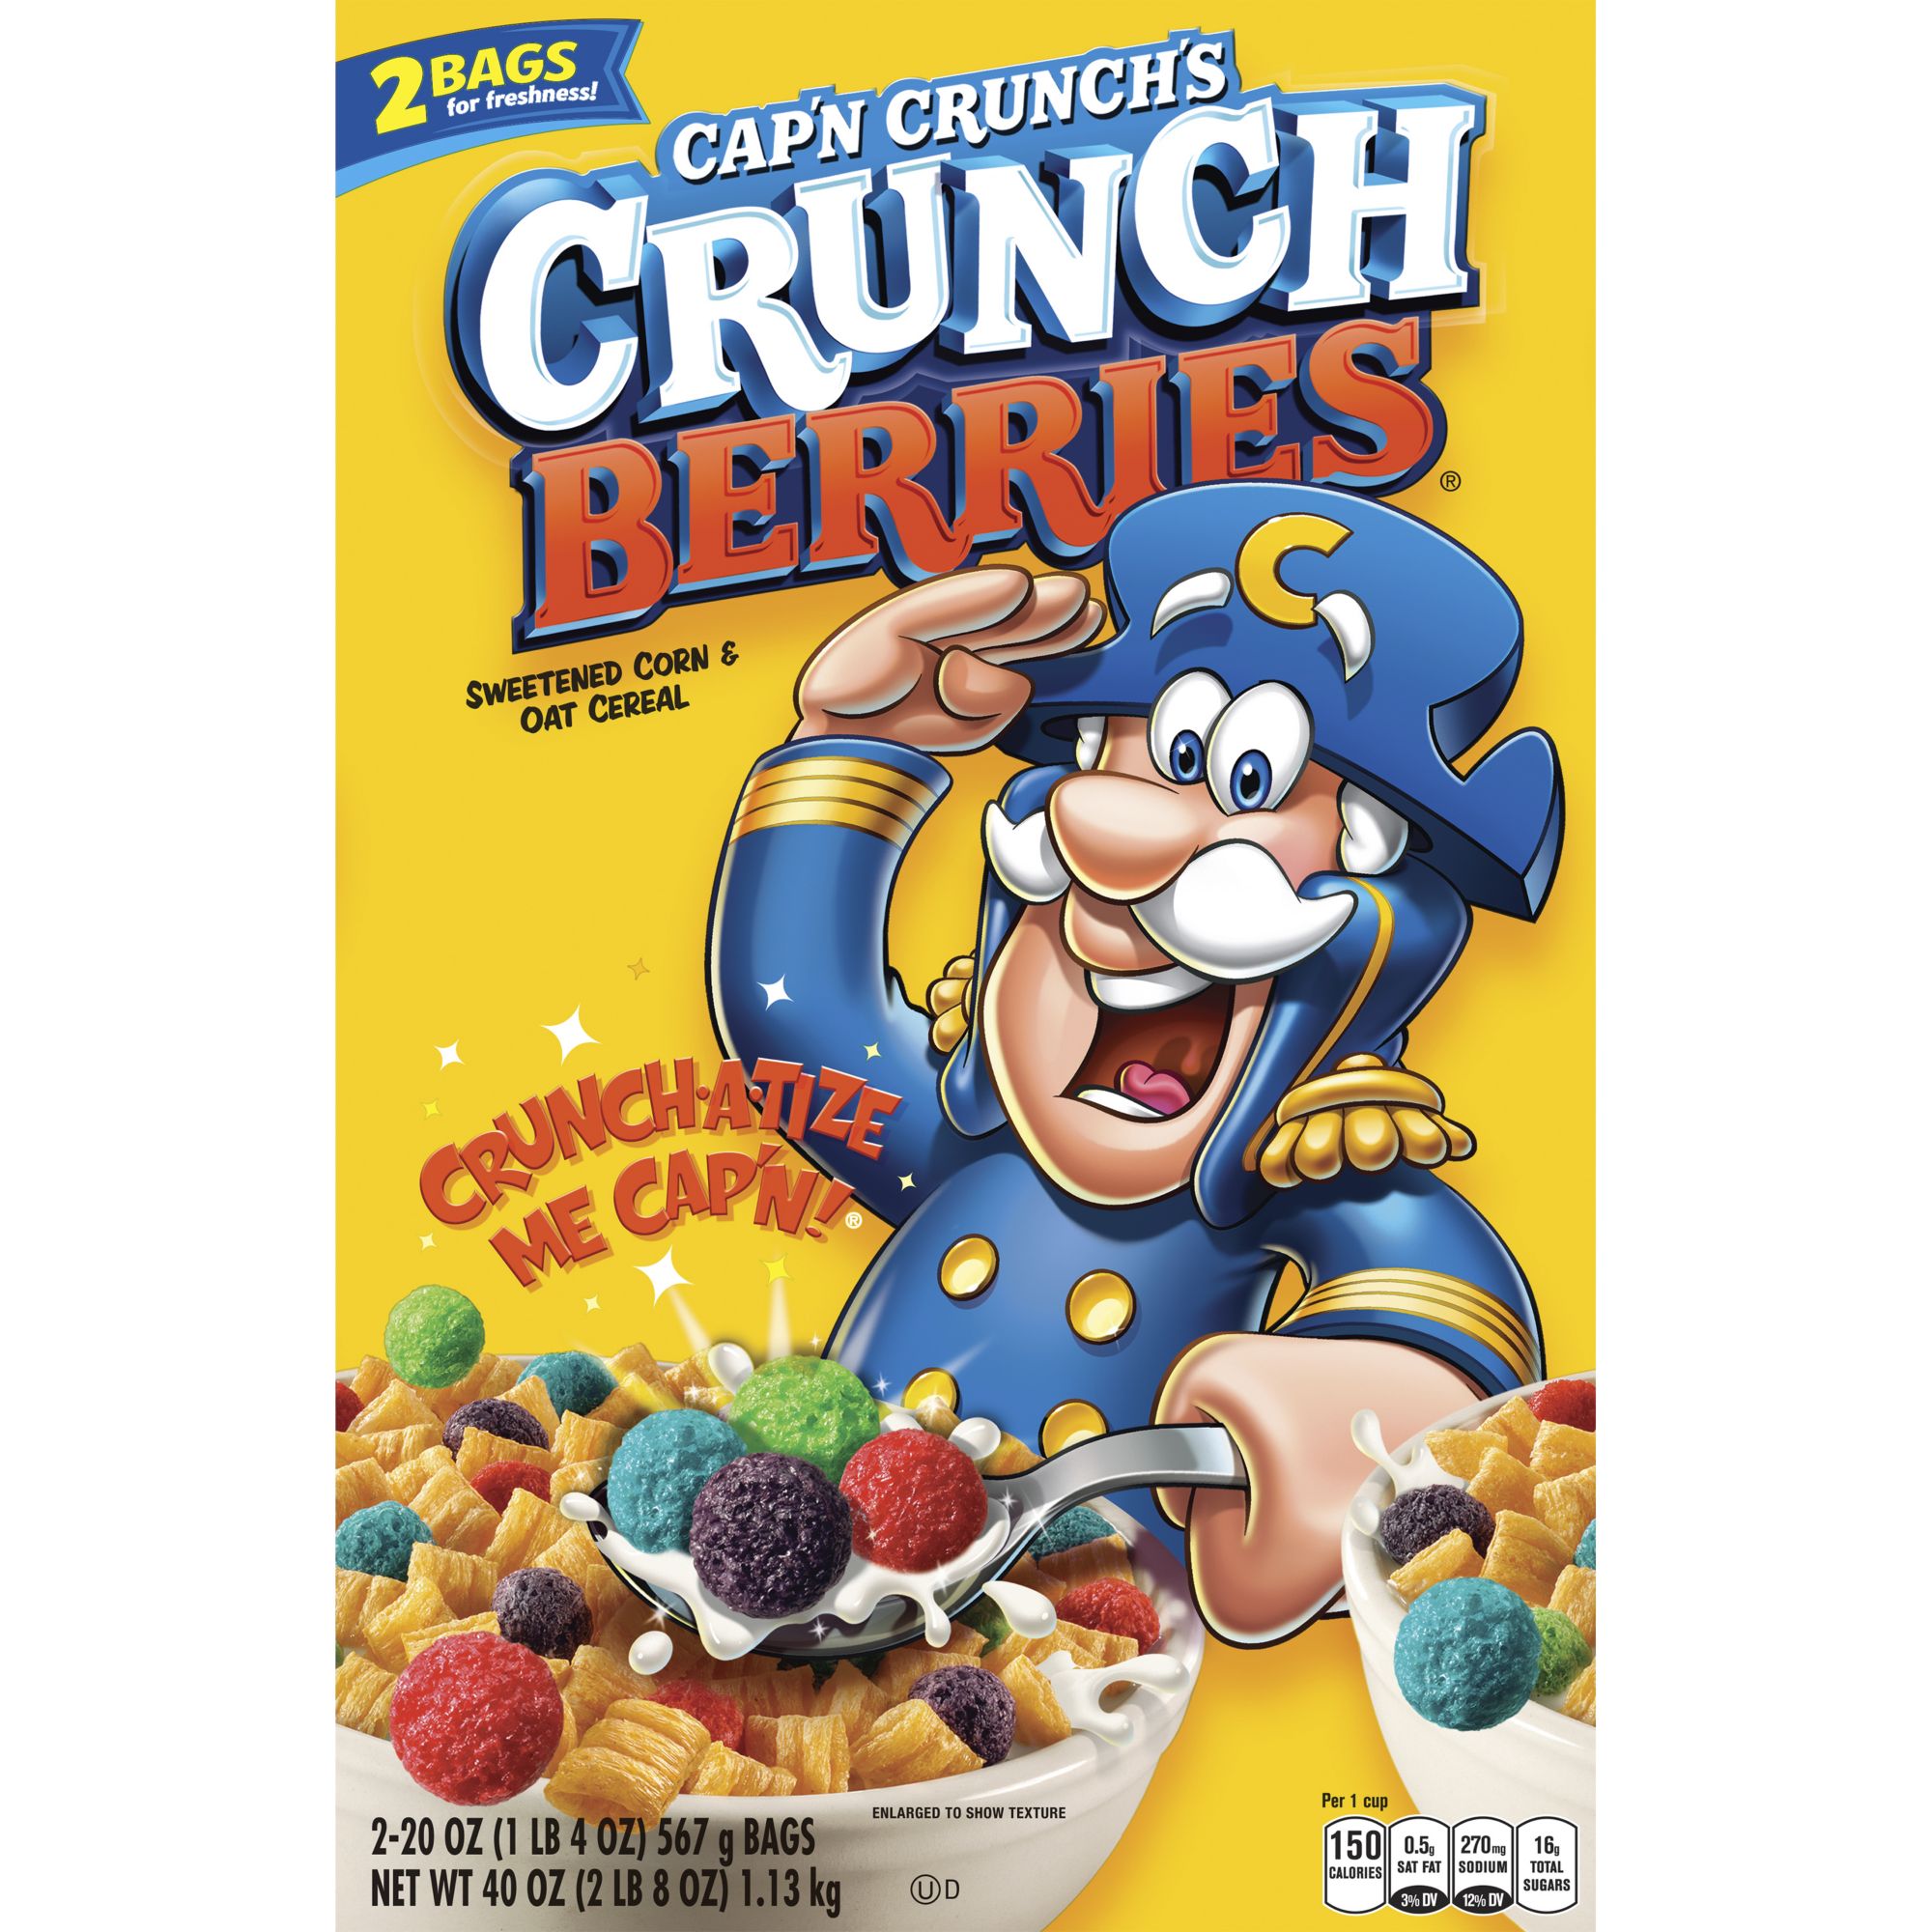 Cap'n Crunch's Crunch Berries Sweetened Corn & Oat Cereal, 2 pk./20 oz.